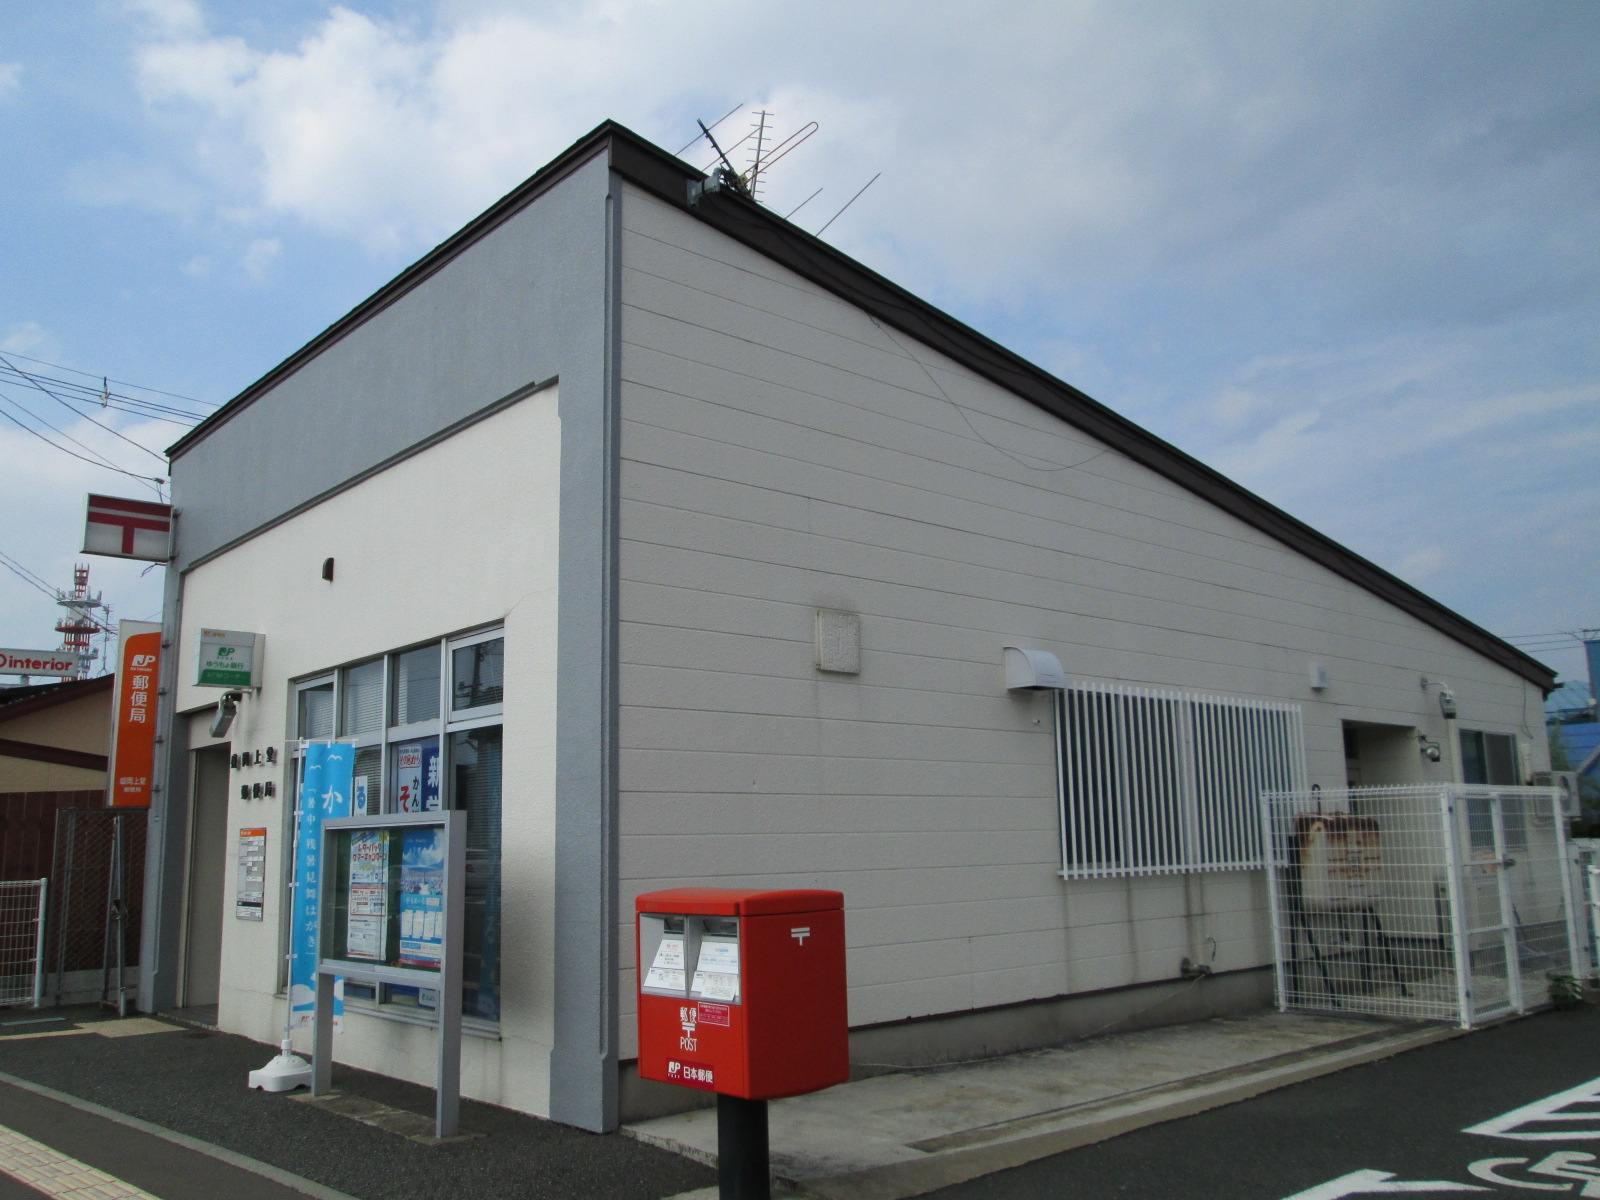 post office. 1267m to Morioka Kamido post office (post office)